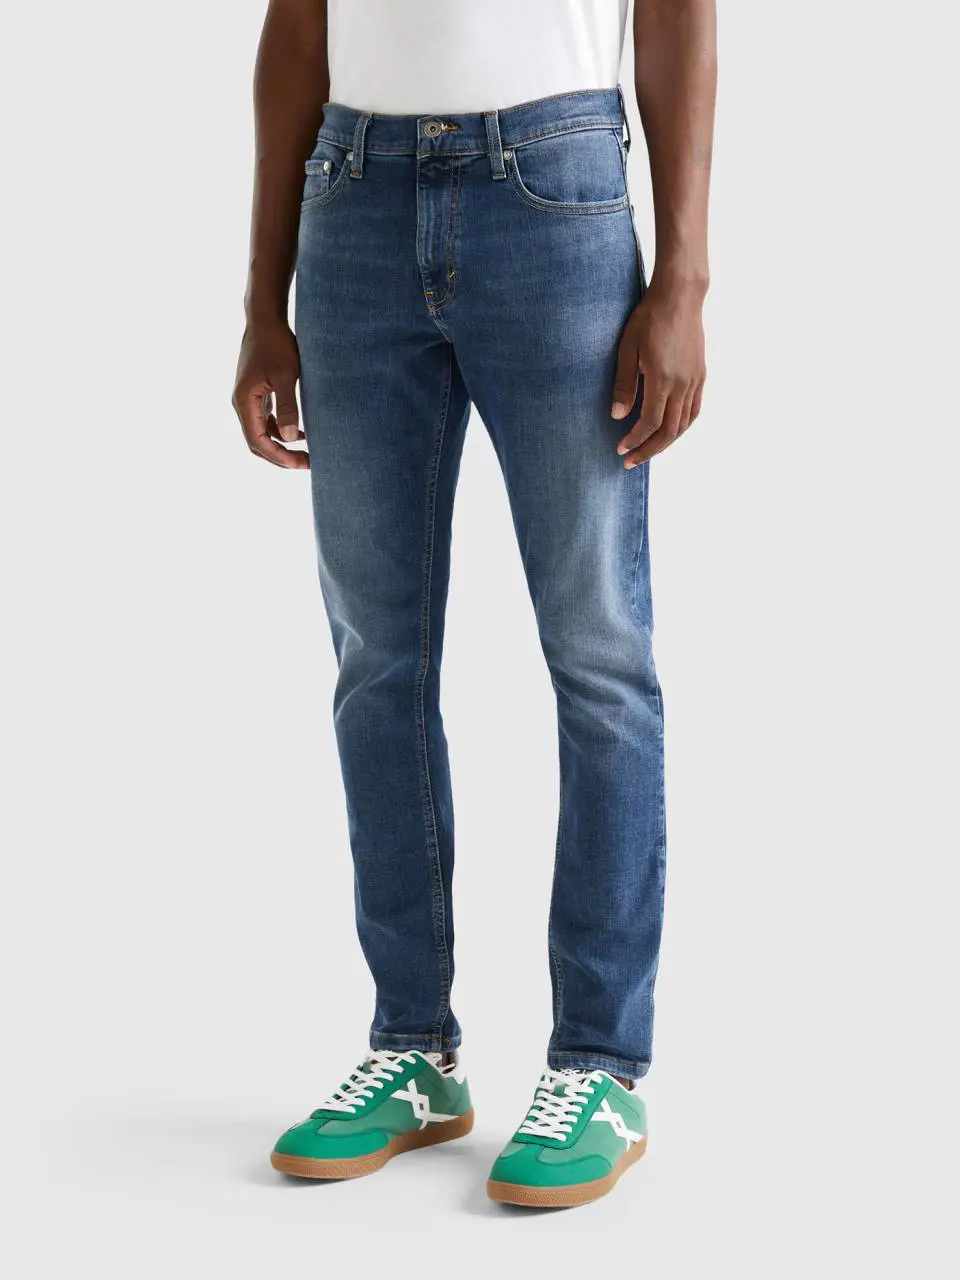 Benetton low crotch slim fit jeans. 1